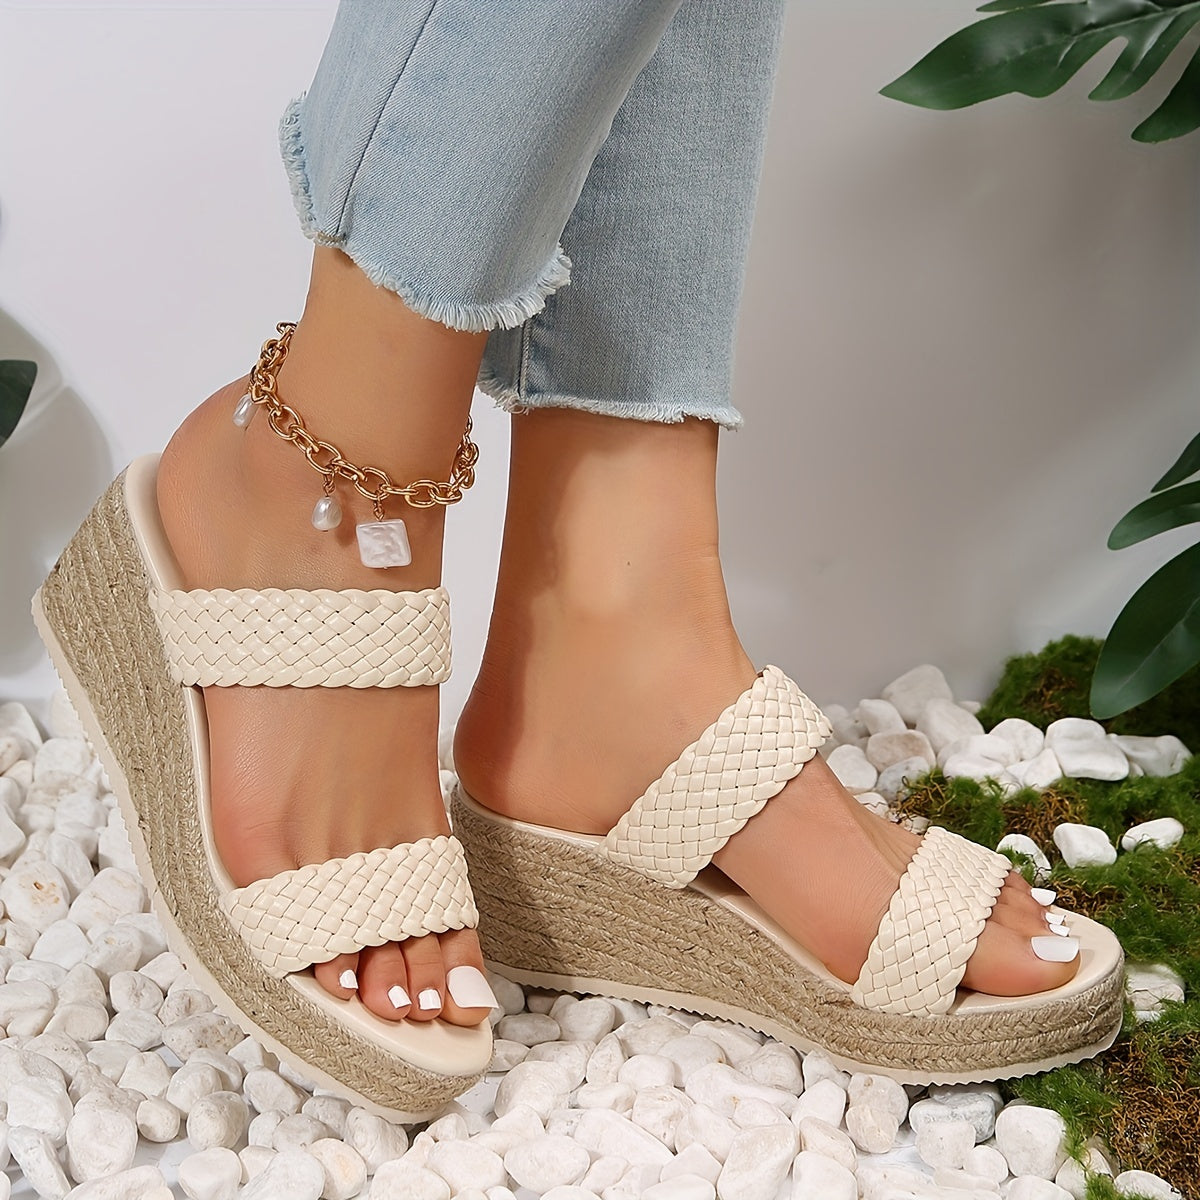 Platform Wedge Sandals for Women - Non Slip, Open Toe, Versatile Summer Shoes